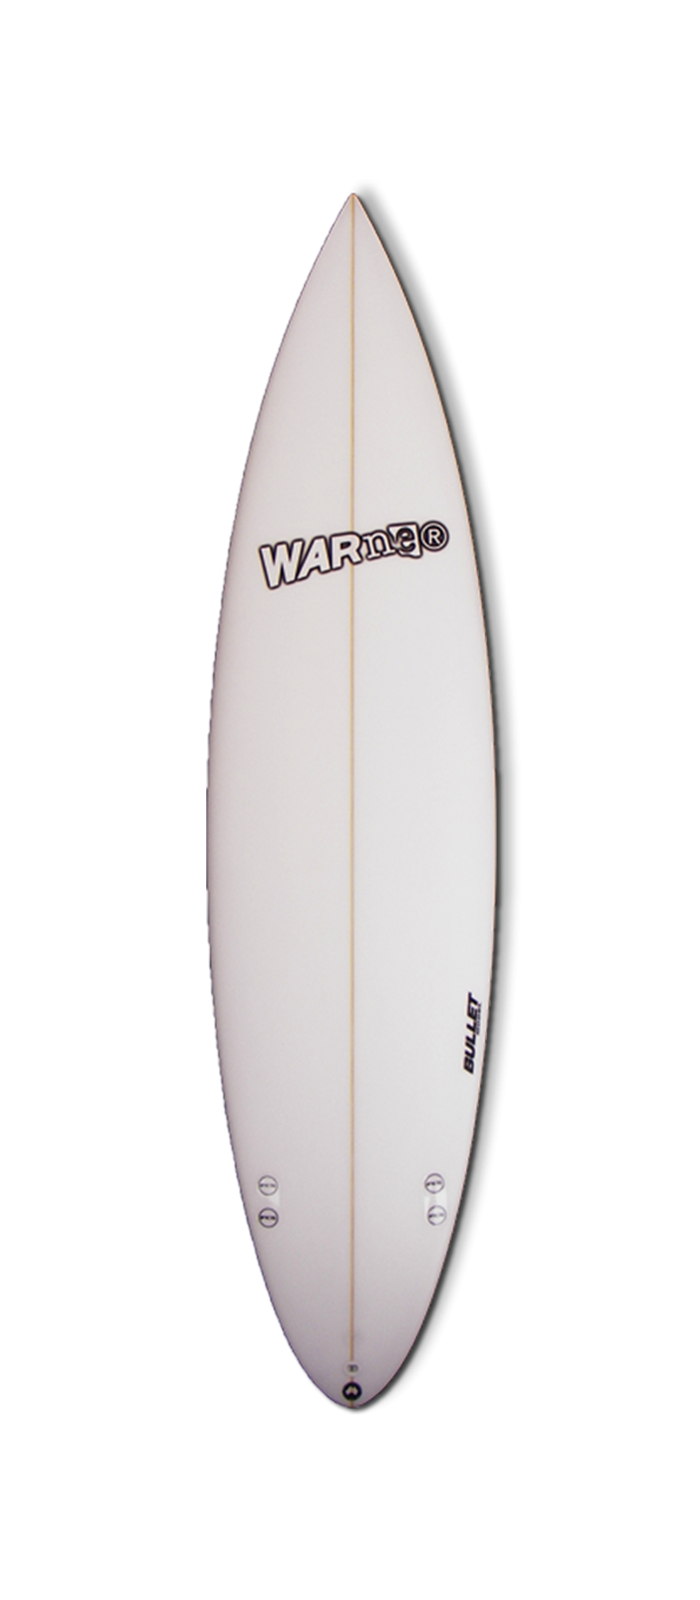 BULLET surfboard model